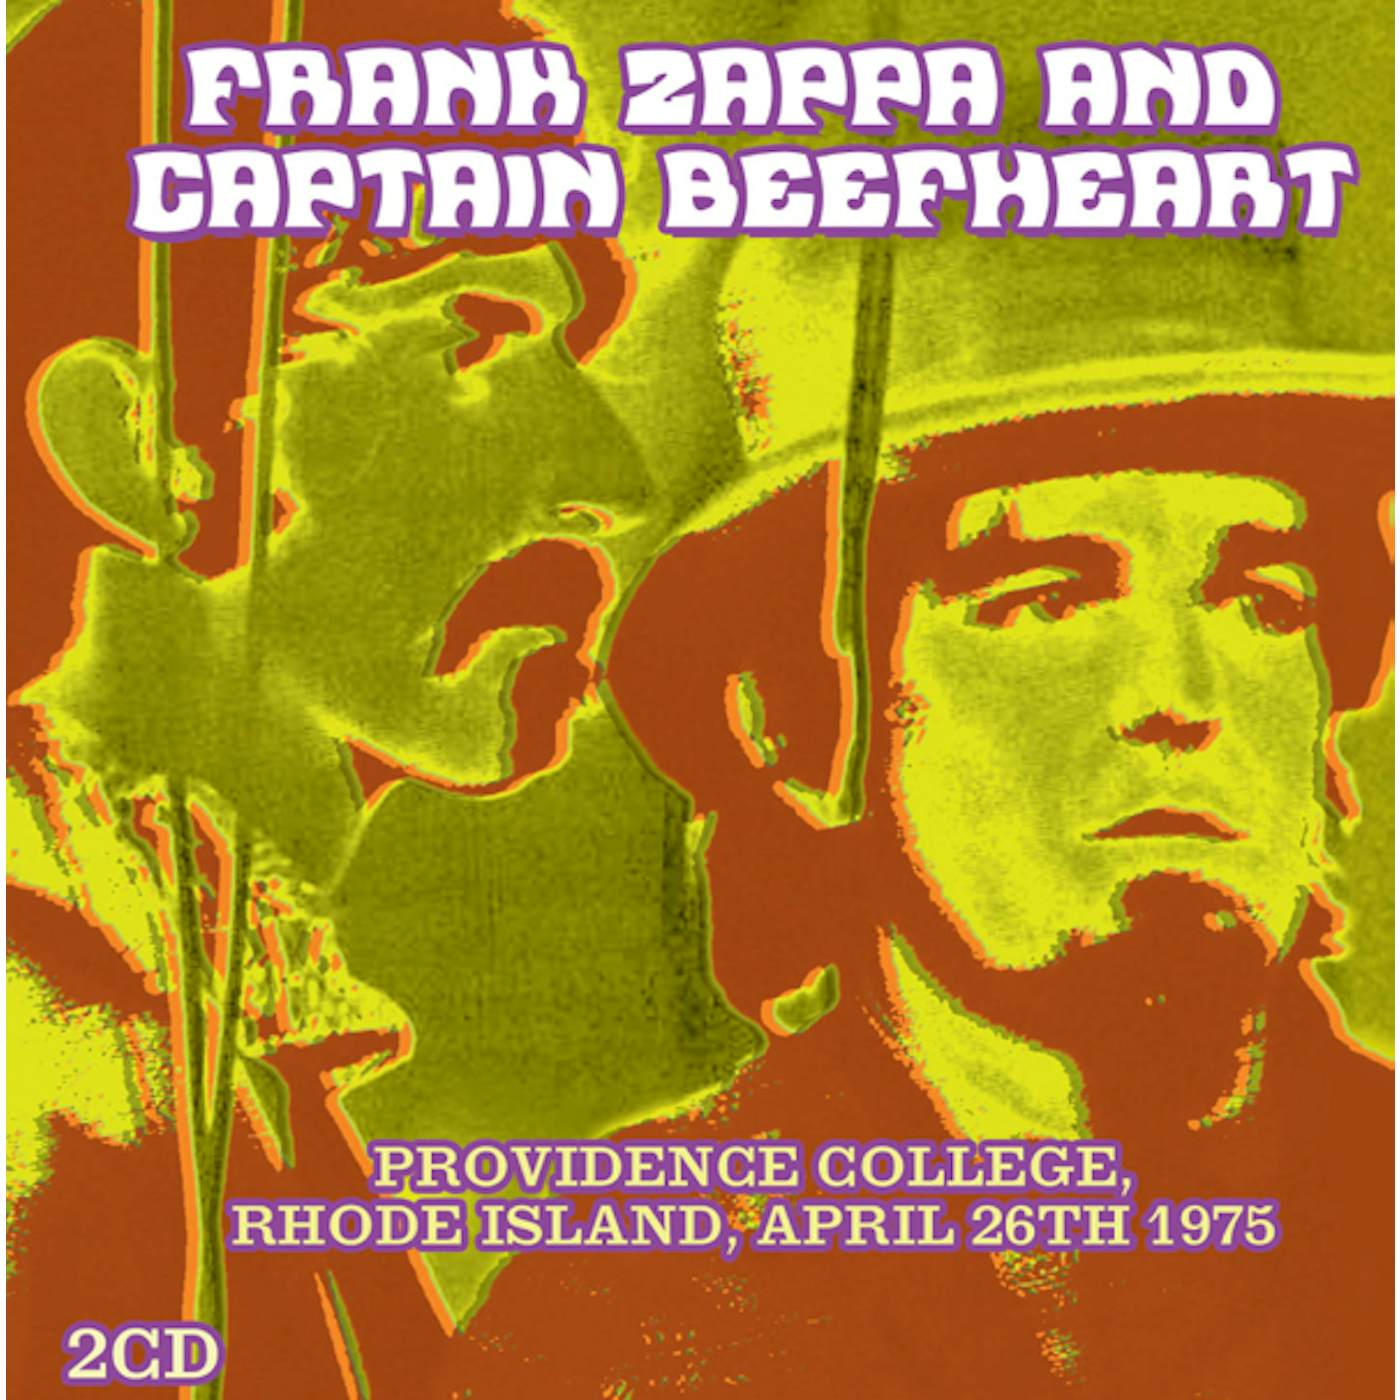 Frank Zappa & Captain Beefheart PROVIDENCE COLLEGE RHODE ISLAND APRIL 26TH 1975 CD